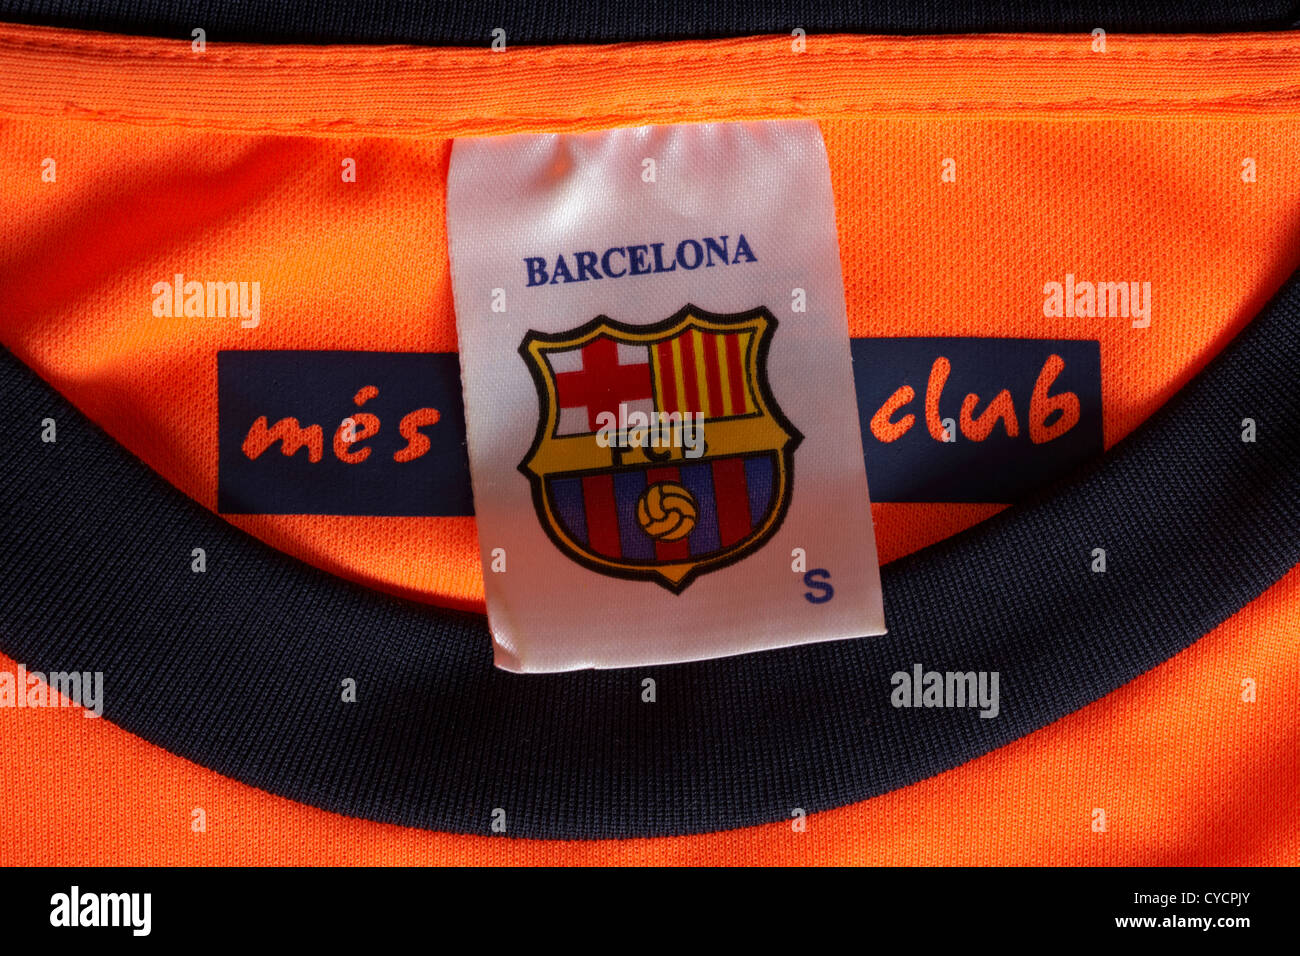 Barcelona FCB label in orange coloured football shirt Stock Photo